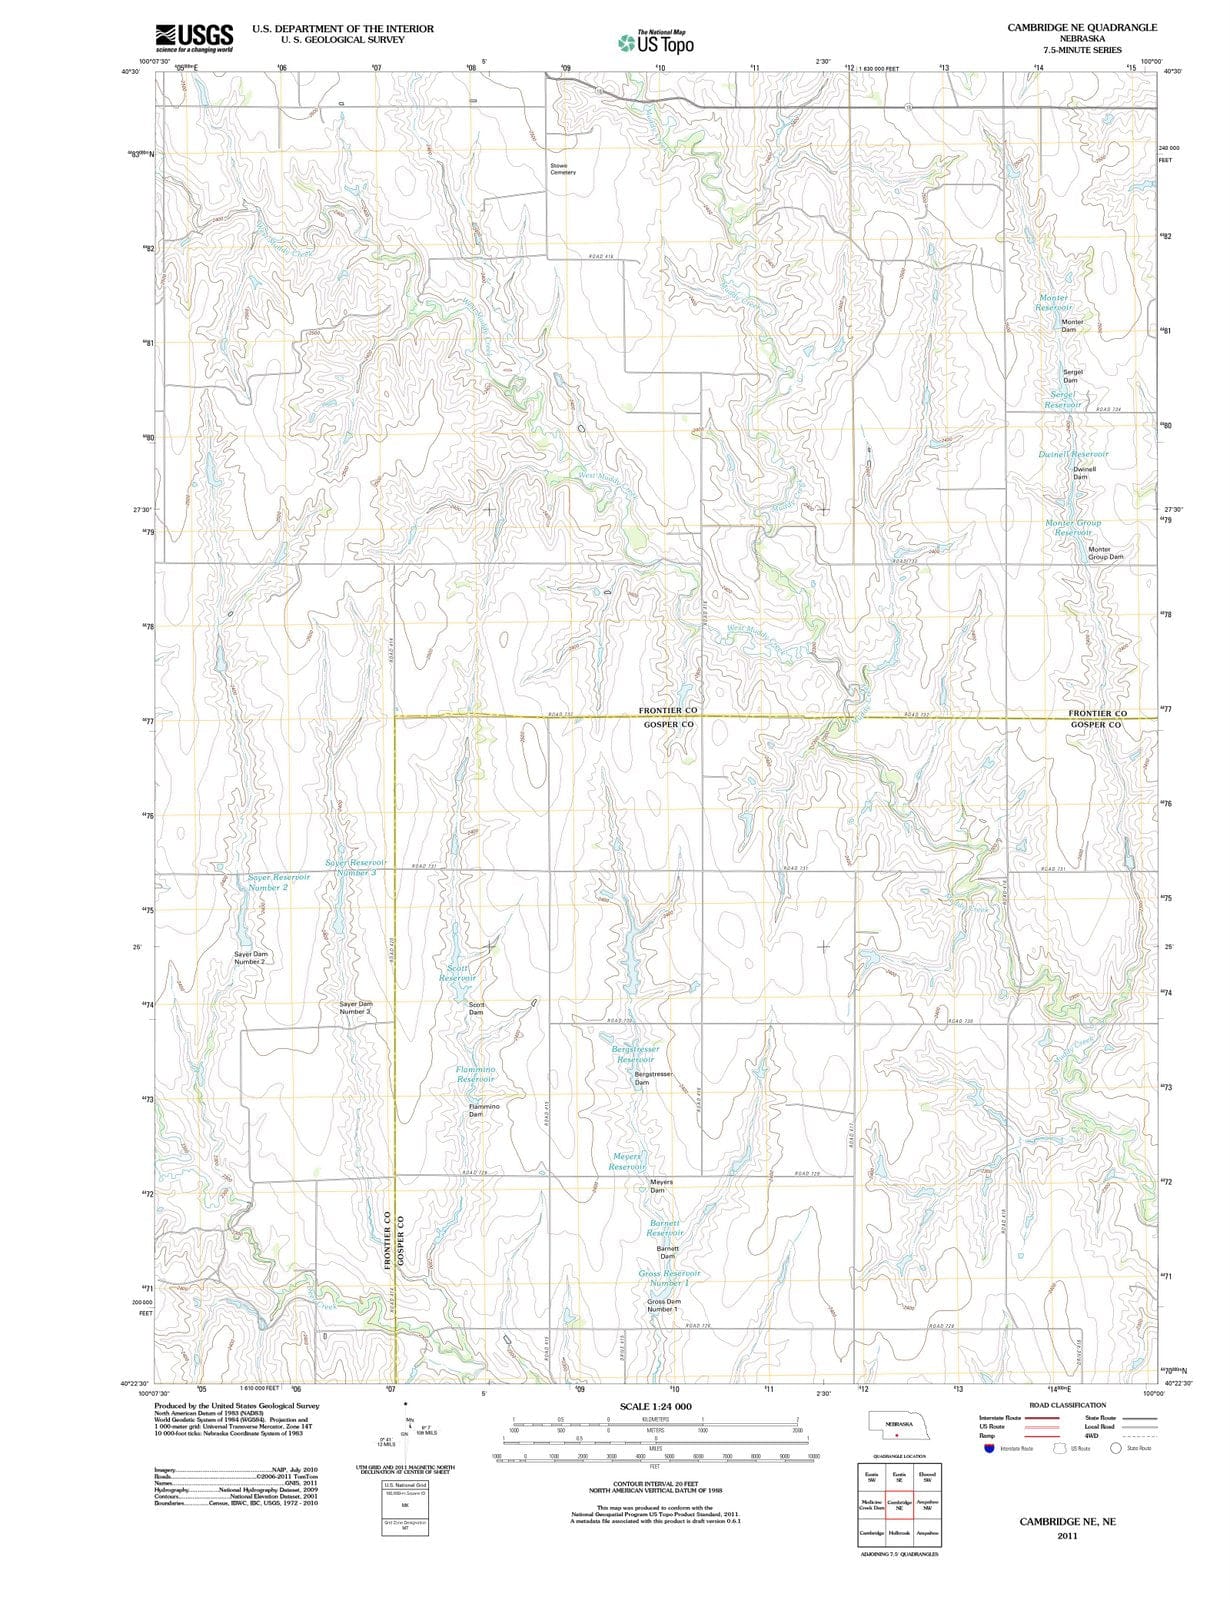 2011 Cambridge, NE - Nebraska - USGS Topographic Map v2